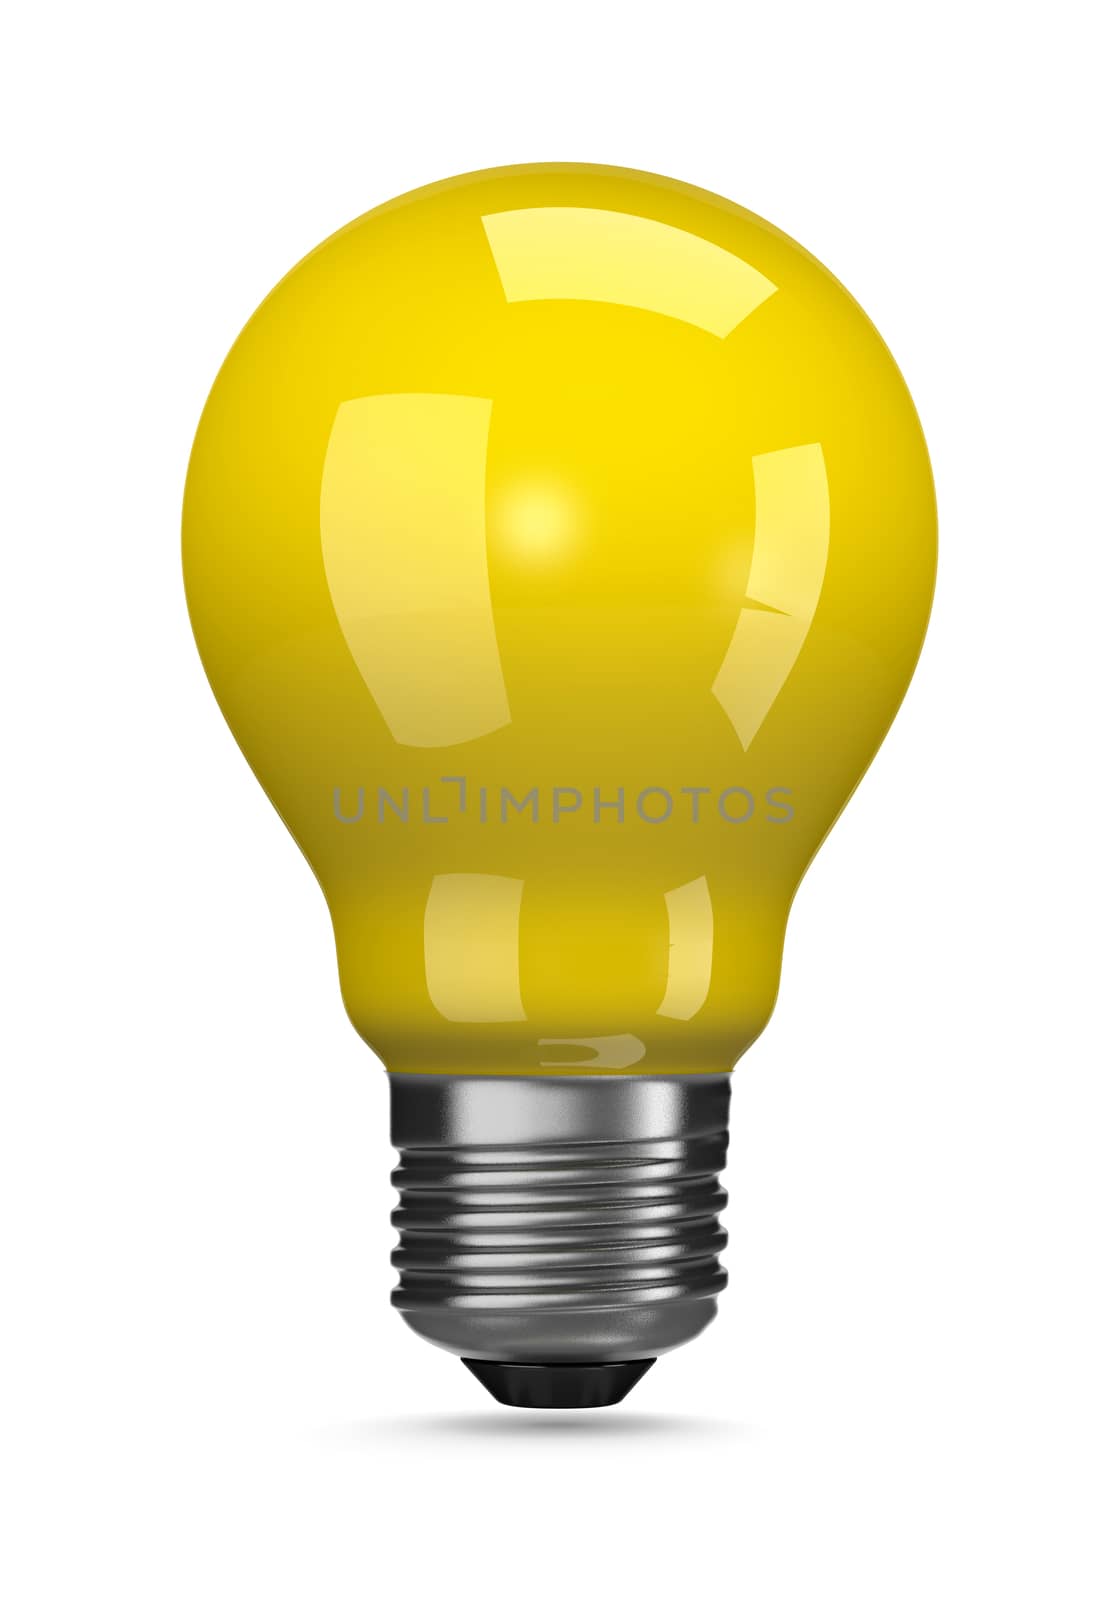 One Single Yellow Light Bulb on White Background 3D Illustration